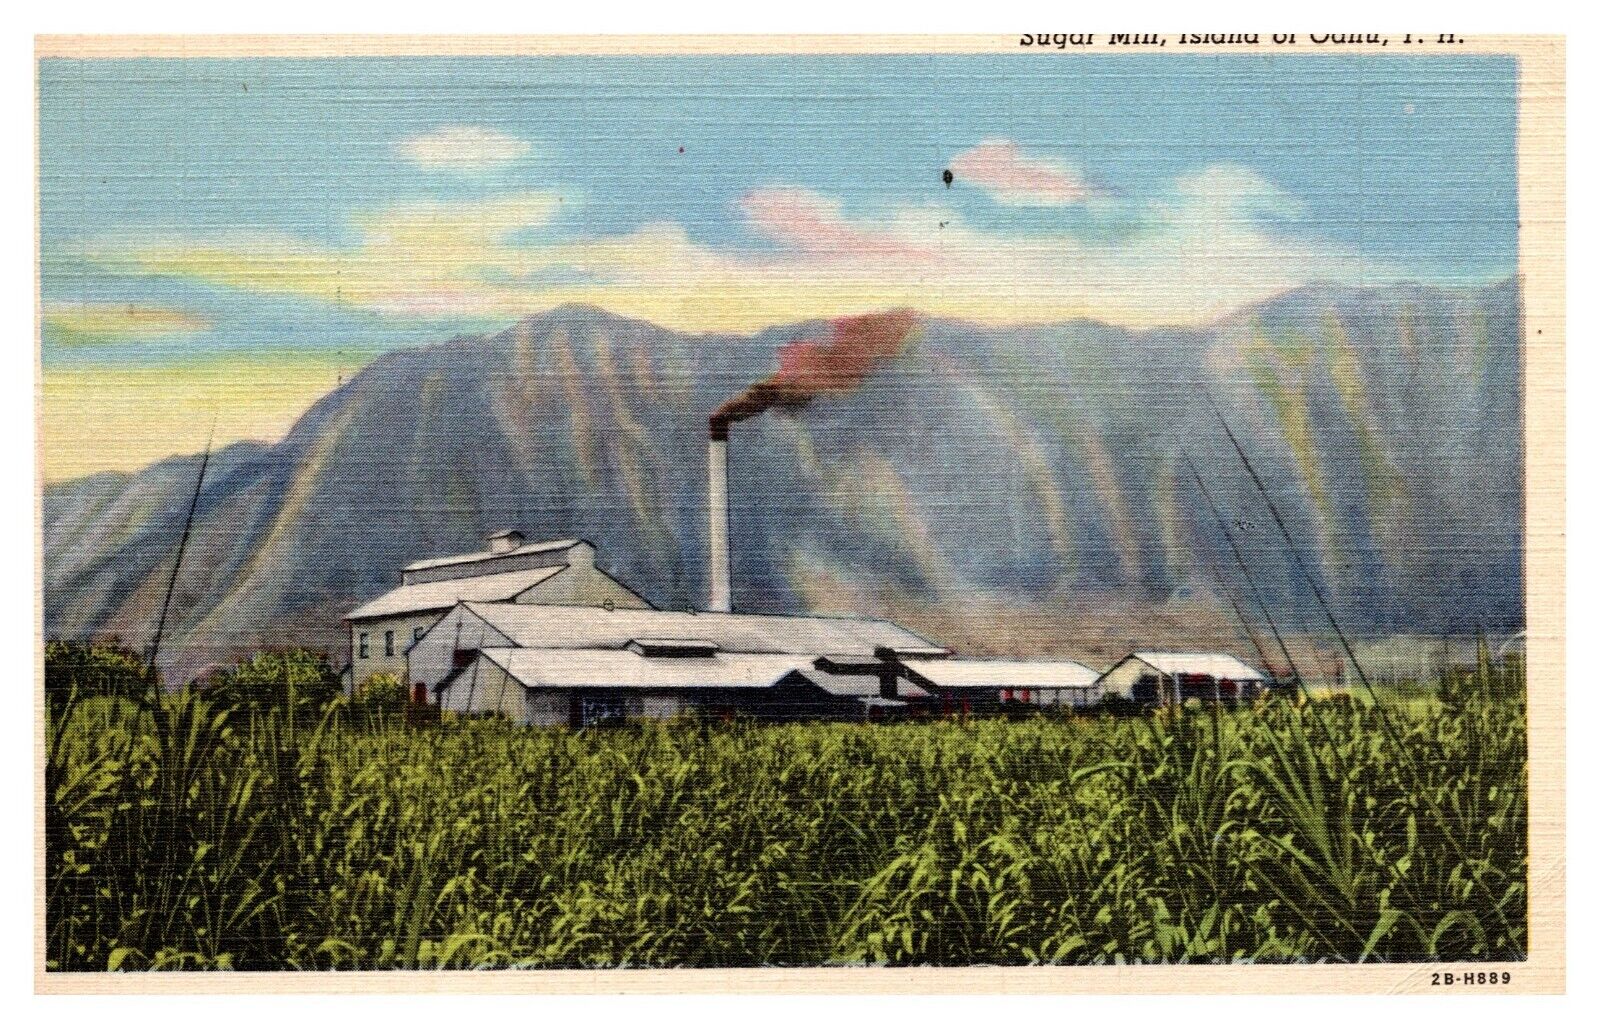 HI Hawaii Island of Oahu Sugar Mill Posted 1948 Linen Postcard